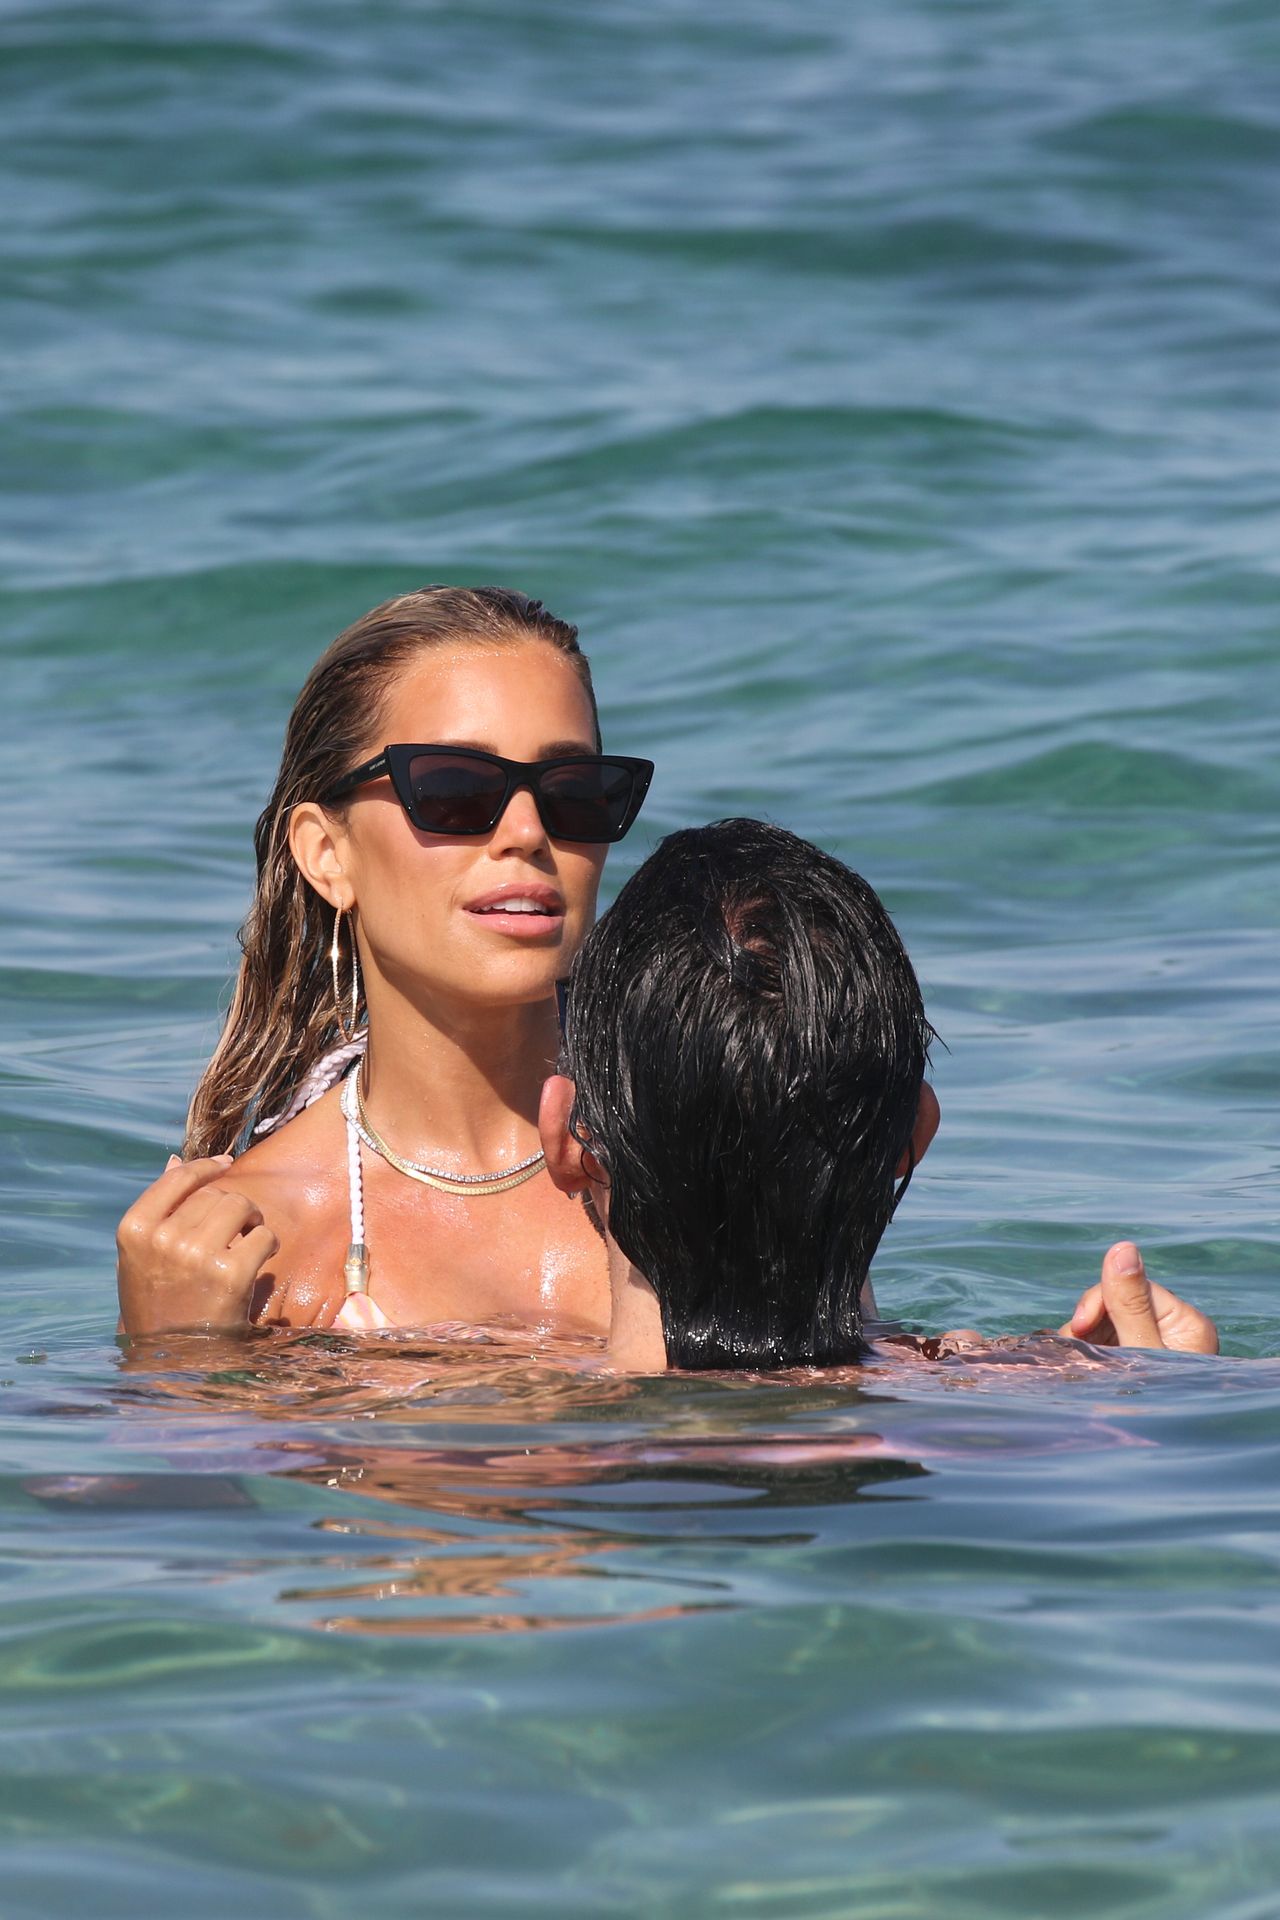 Sylvie Meis & Niclas Castello Is Seen During a Beach Day in Saint Tropez (75 Photos)